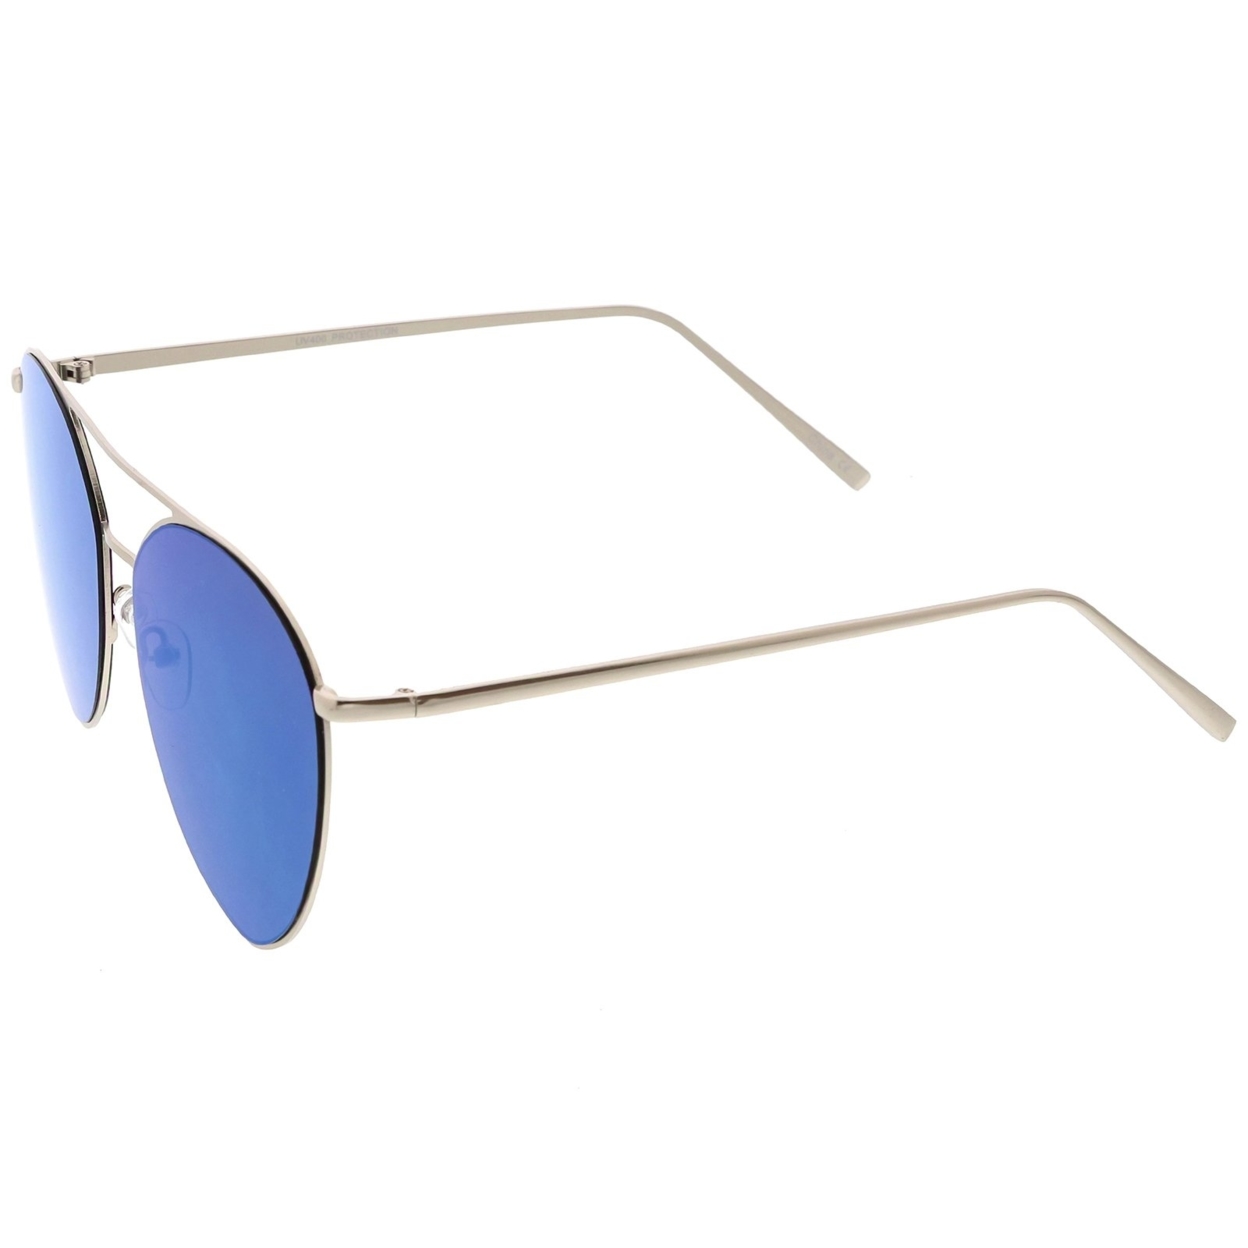 Oversize Thin Metal Aviator Sunglasses Double Crossbar Mirrored Flat Lens 62mm - Silver / Blue Mirror